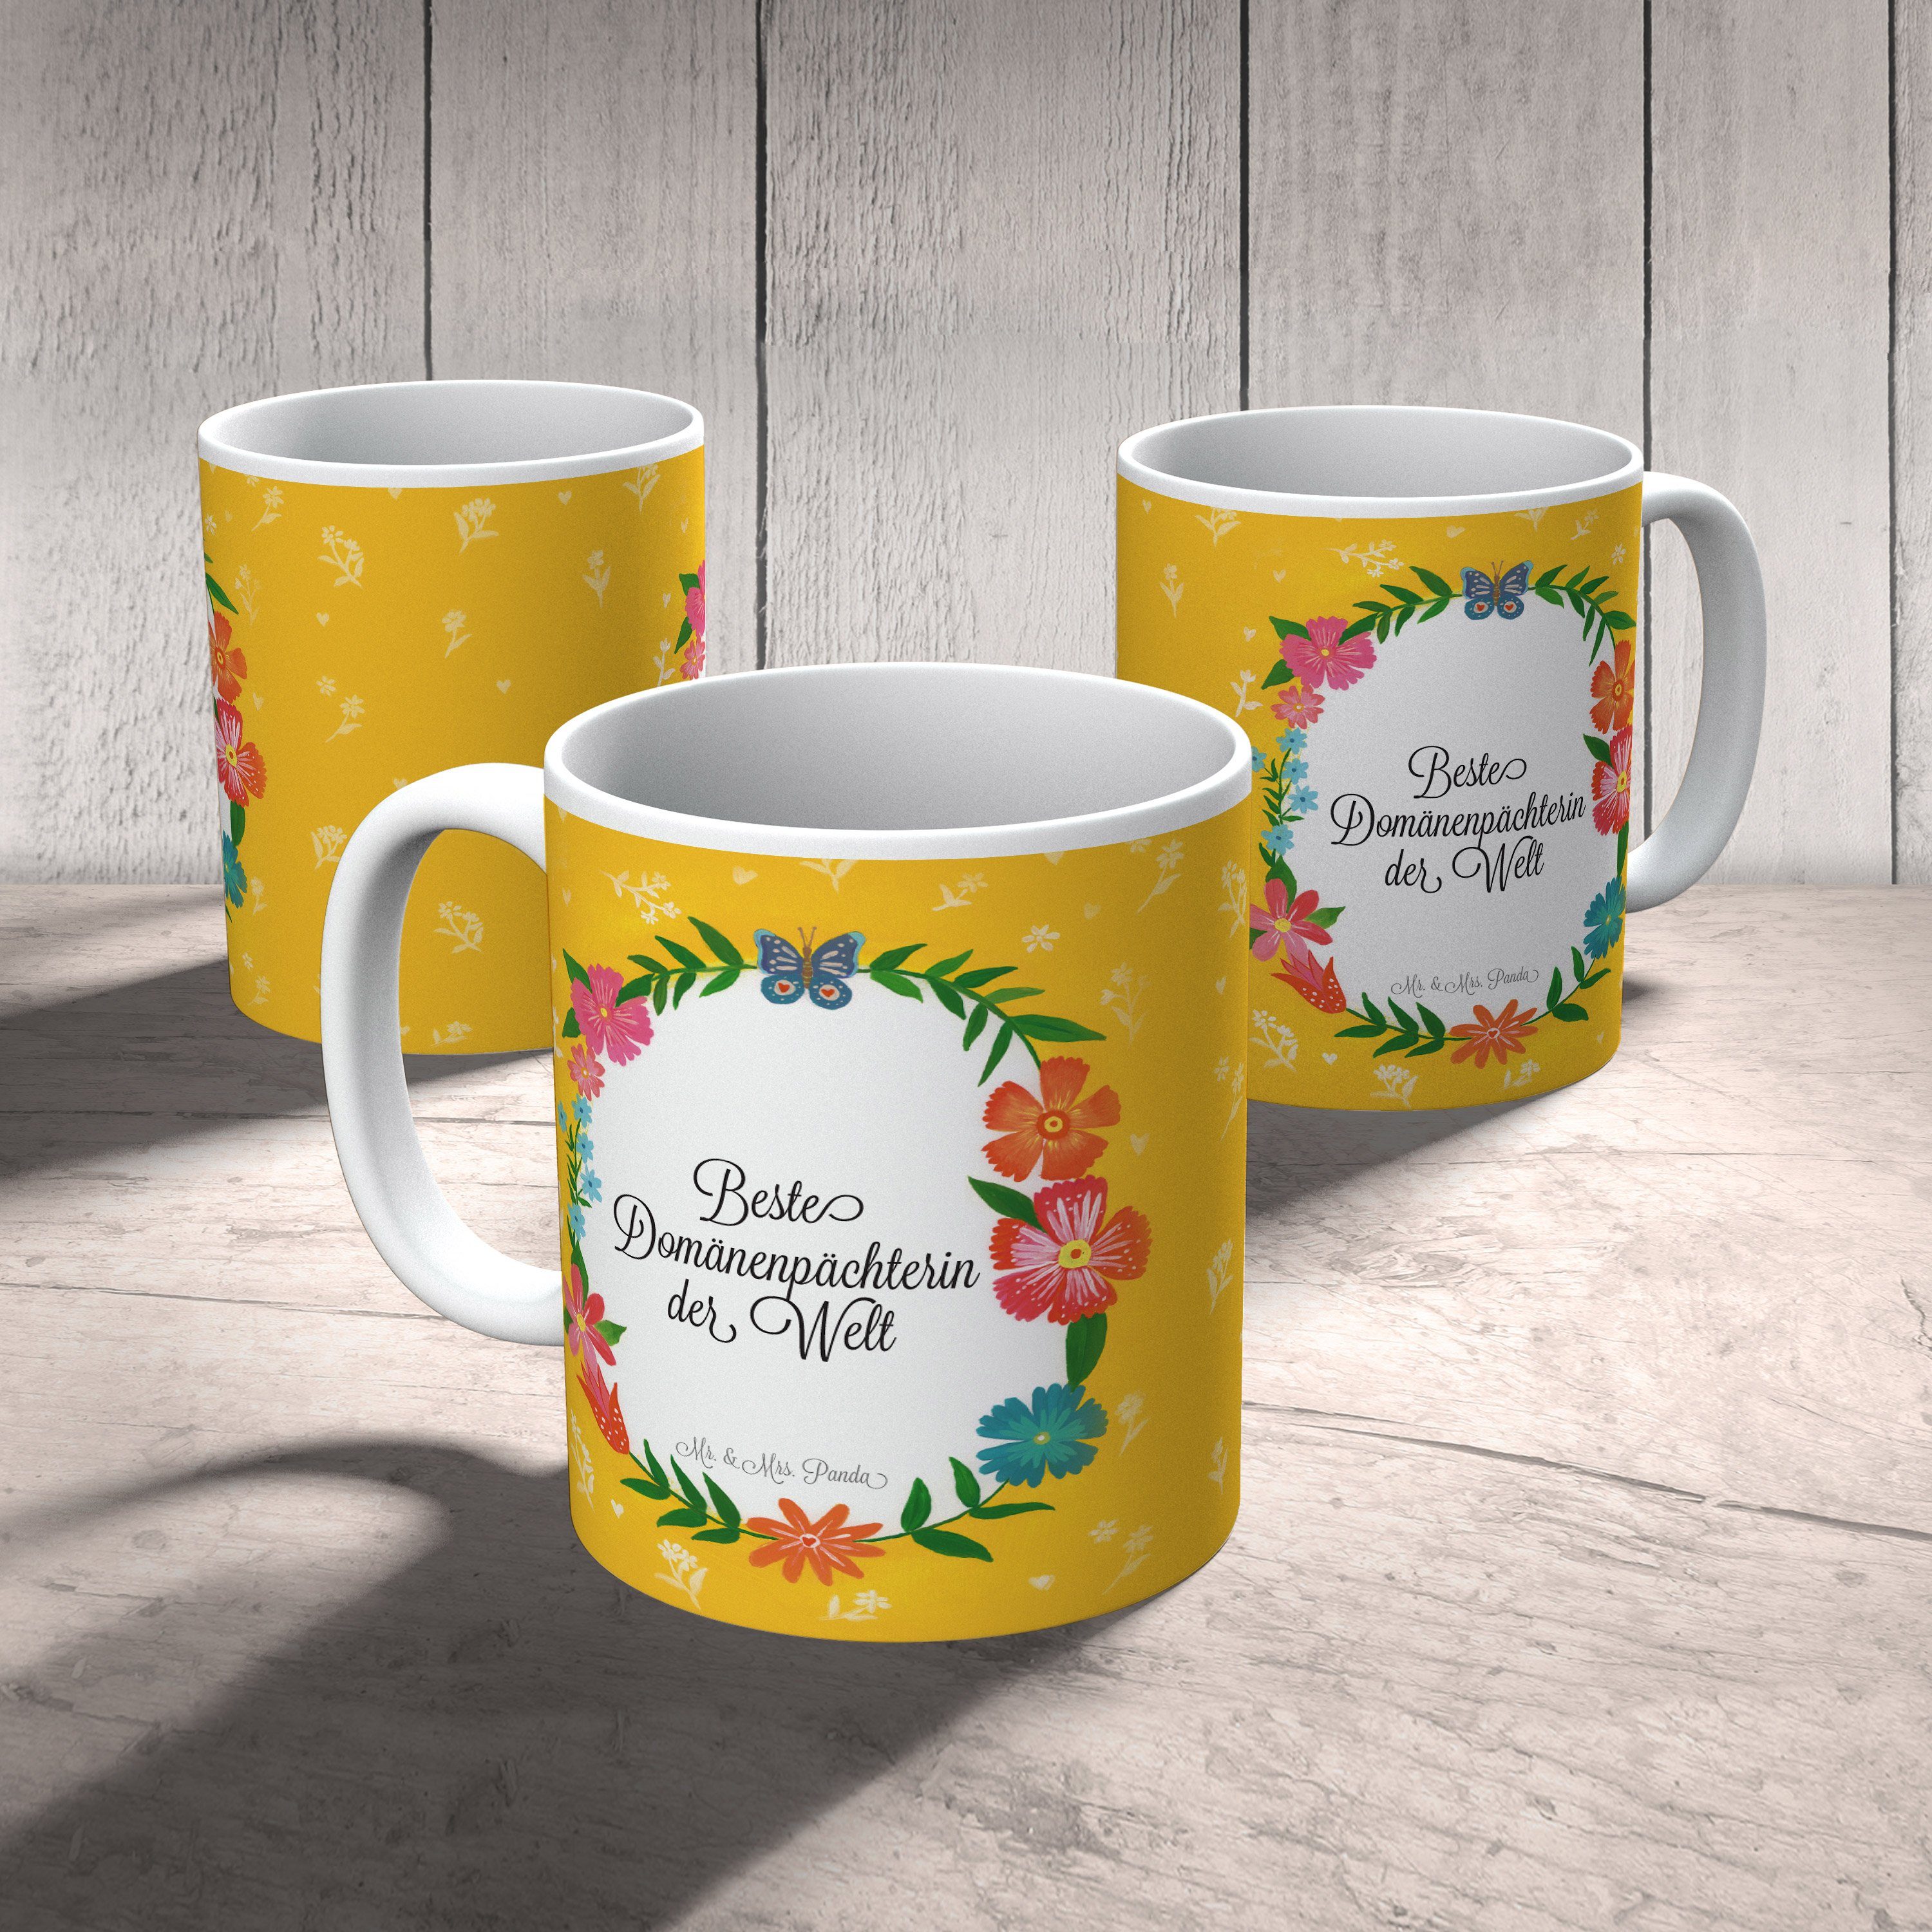 Mr. & Mrs. Panda Porzellantasse, Kaffeetasse, - Tasse Domänenpächterin Geschenk, Keramik Ausbildung